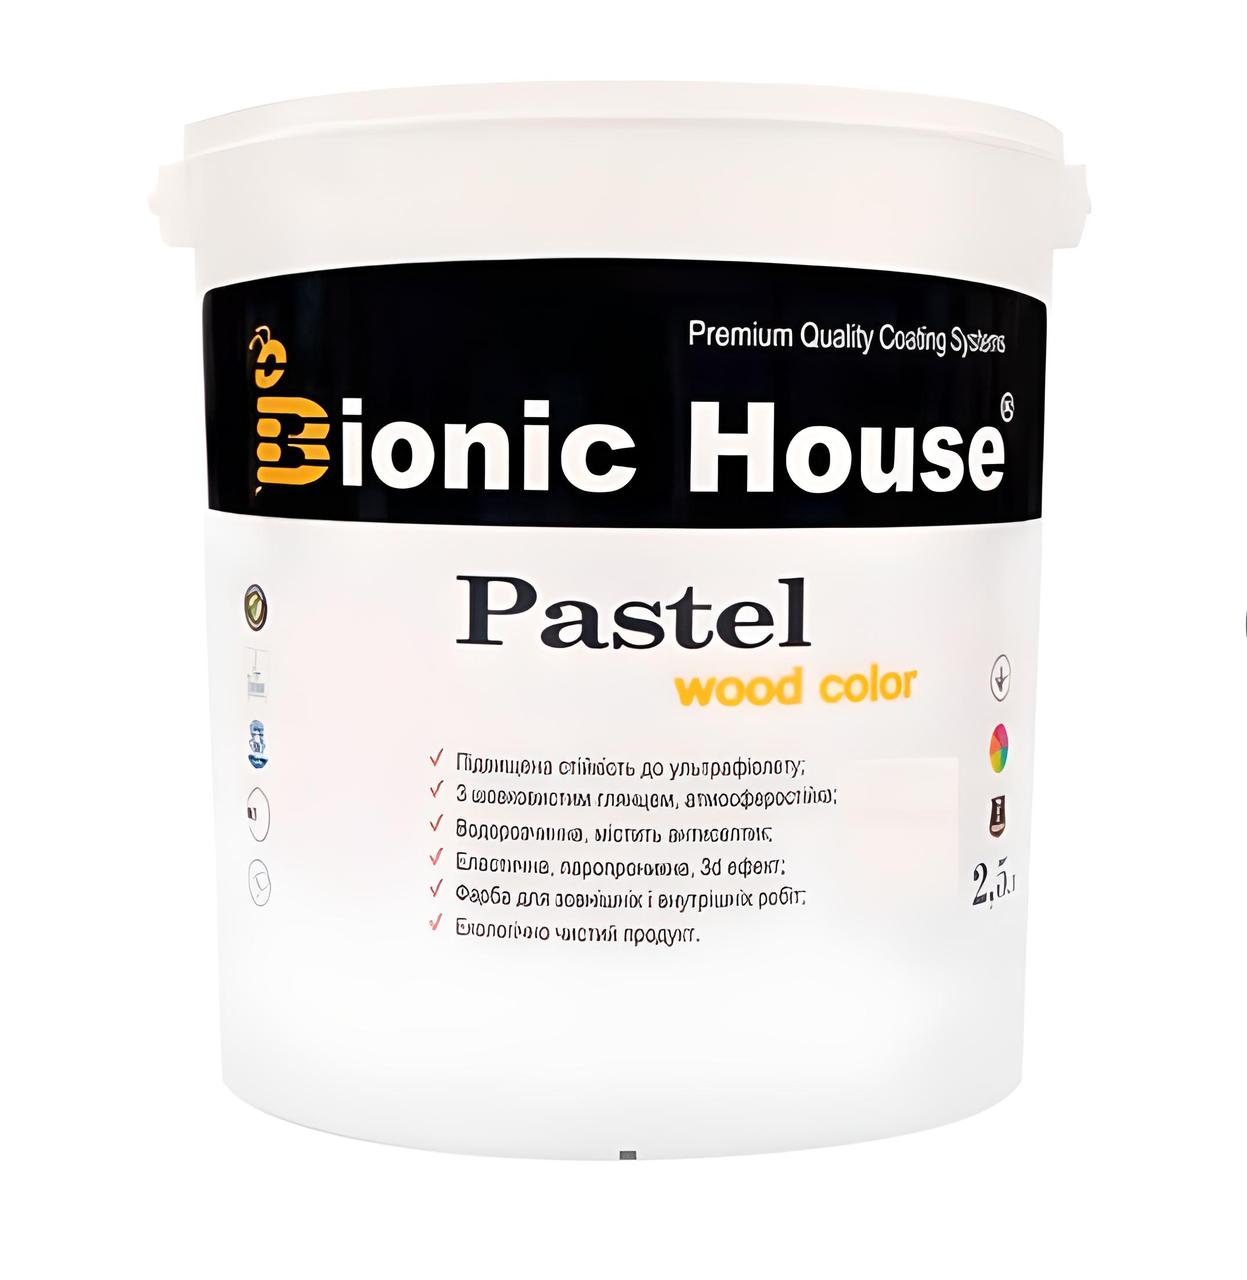 Bionic-House PASTEL Wood color- Фарба антисептичної дії